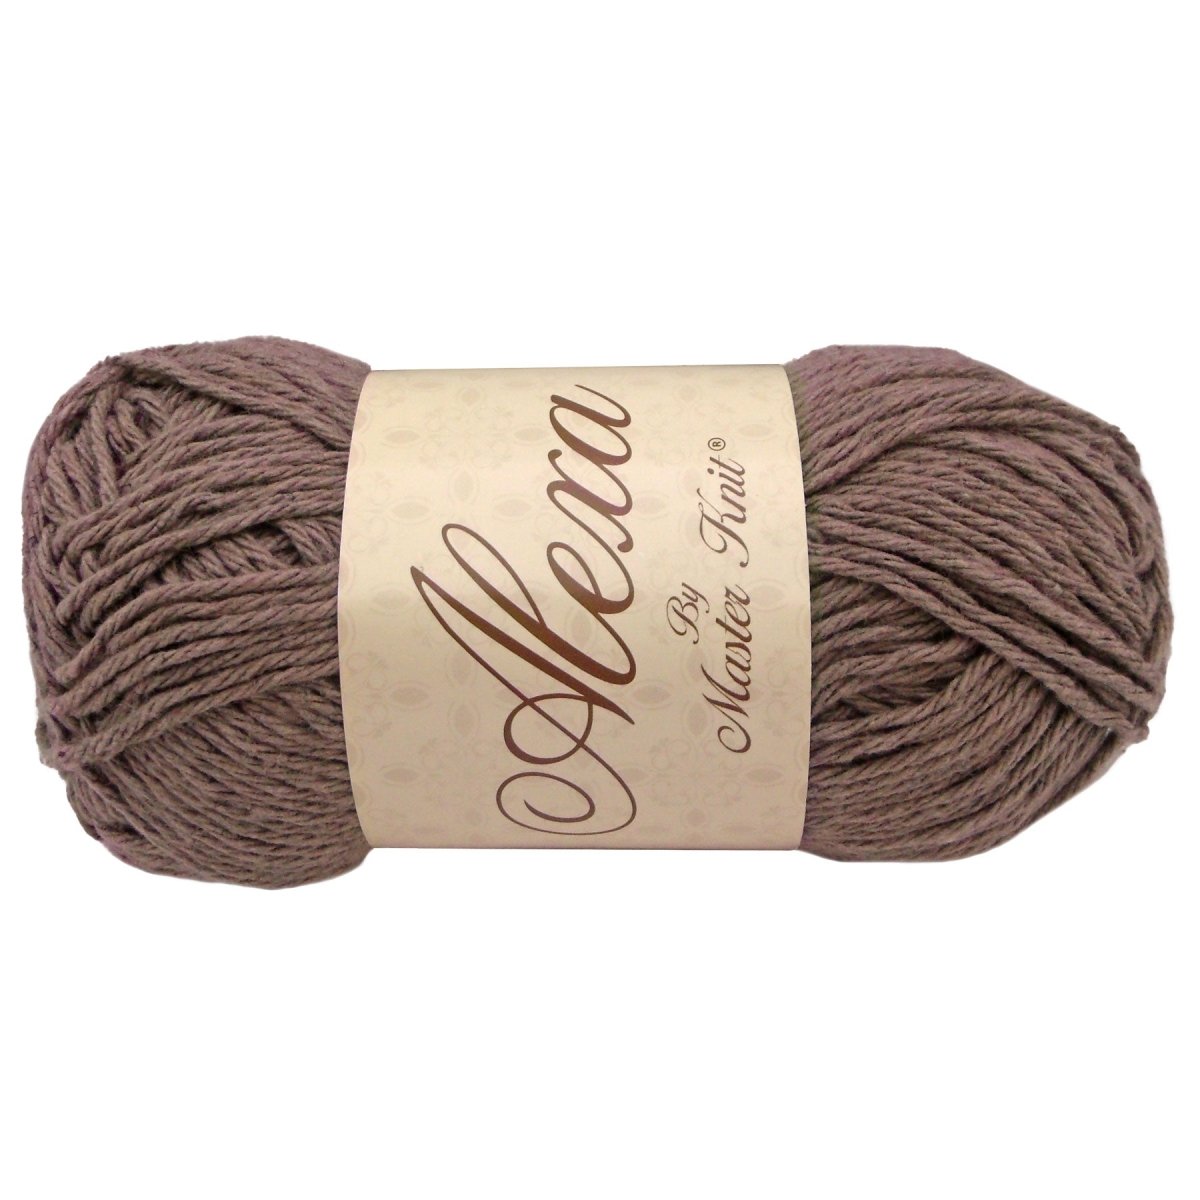 ALEXA - Crochetstores9340-881